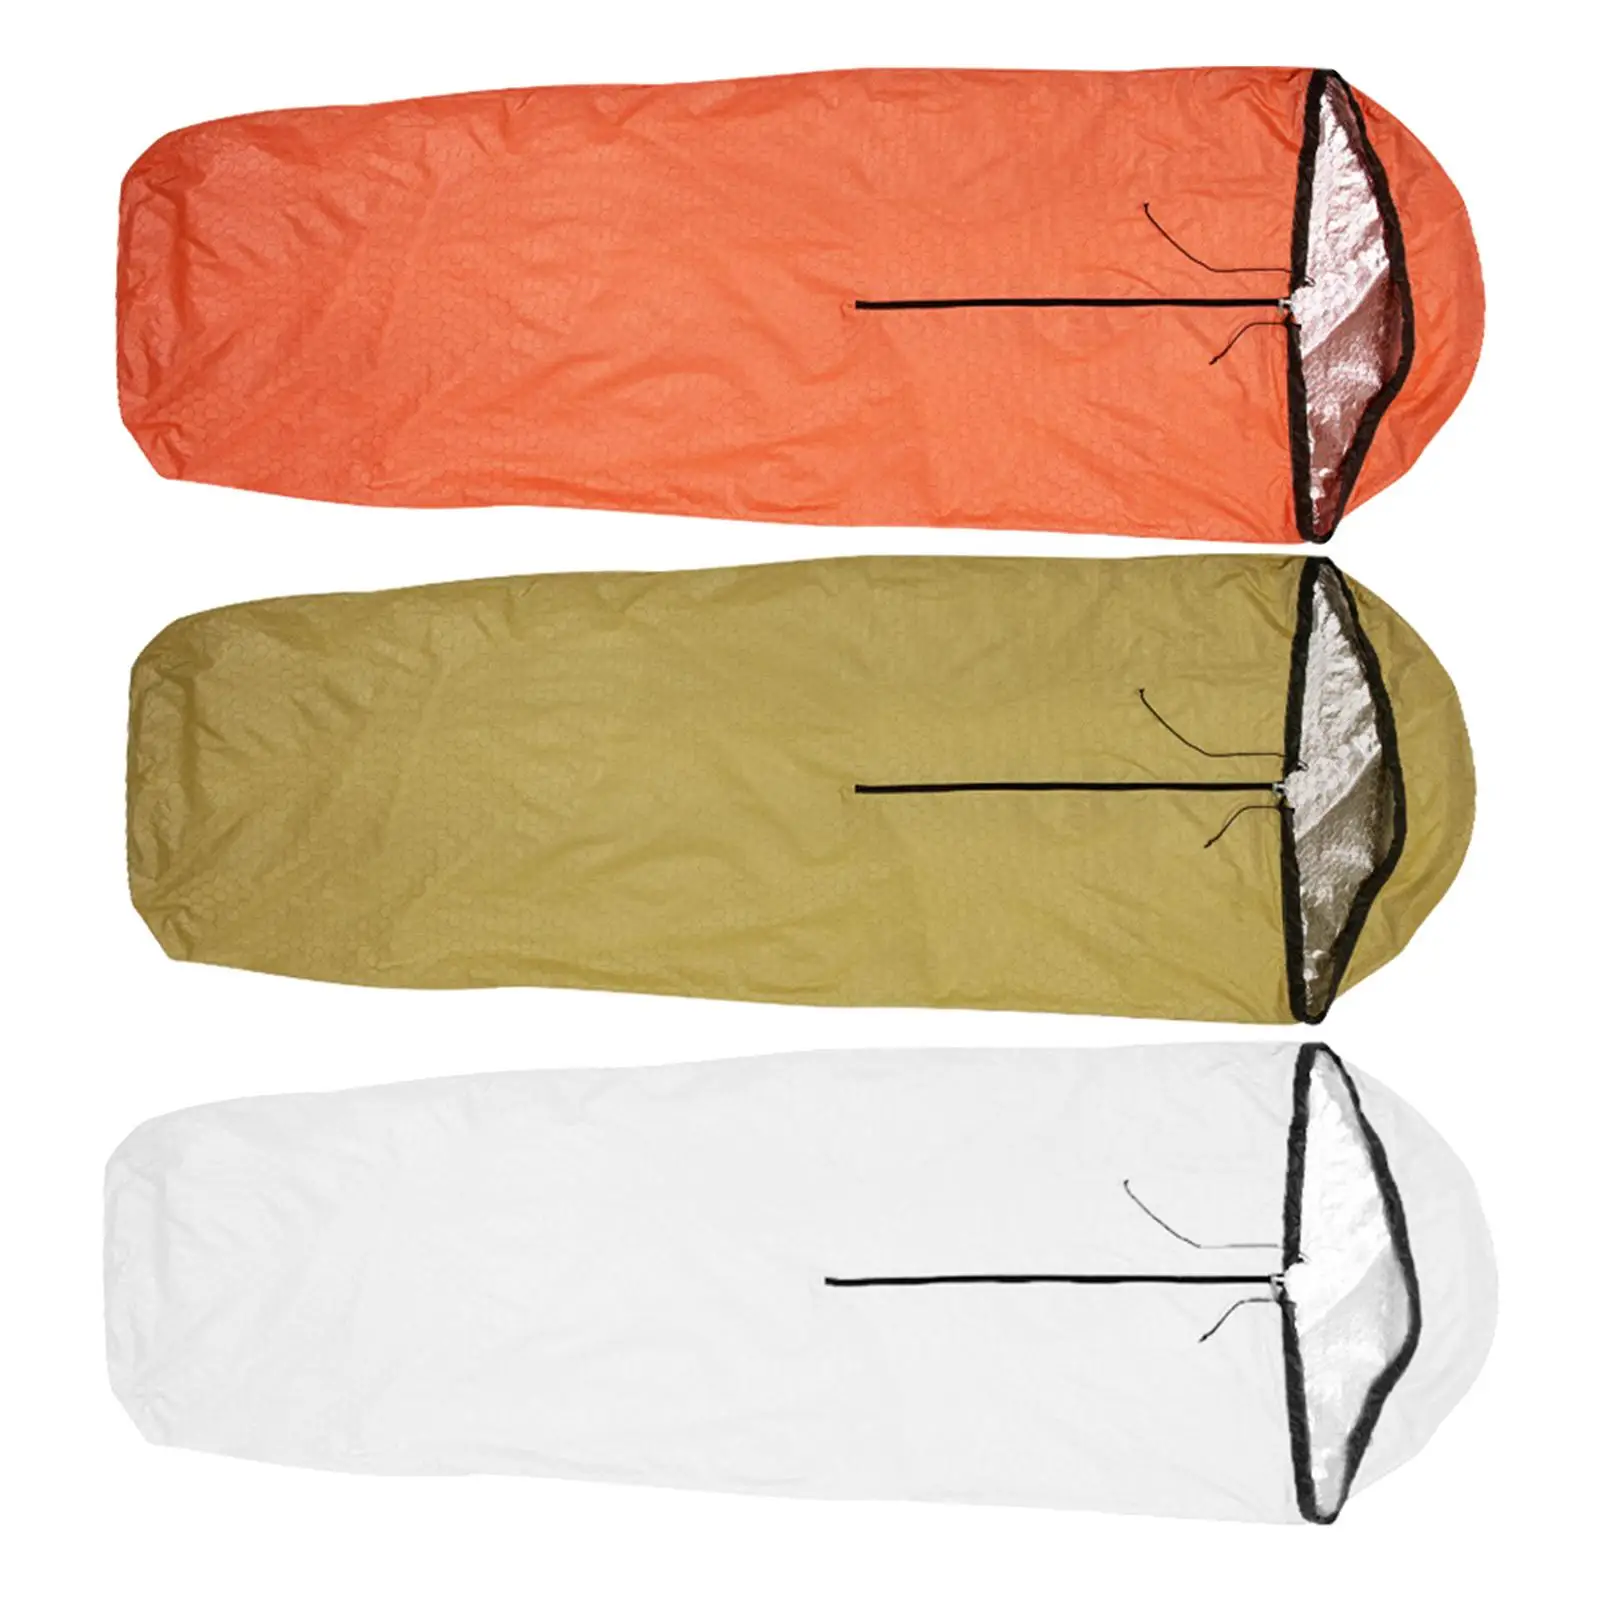 Emergency Sleeping Bag Reusable Multi Purpose Lightweight Survival Bag for Outdoor Survival Hiking Hurricanes Sleeping Adults